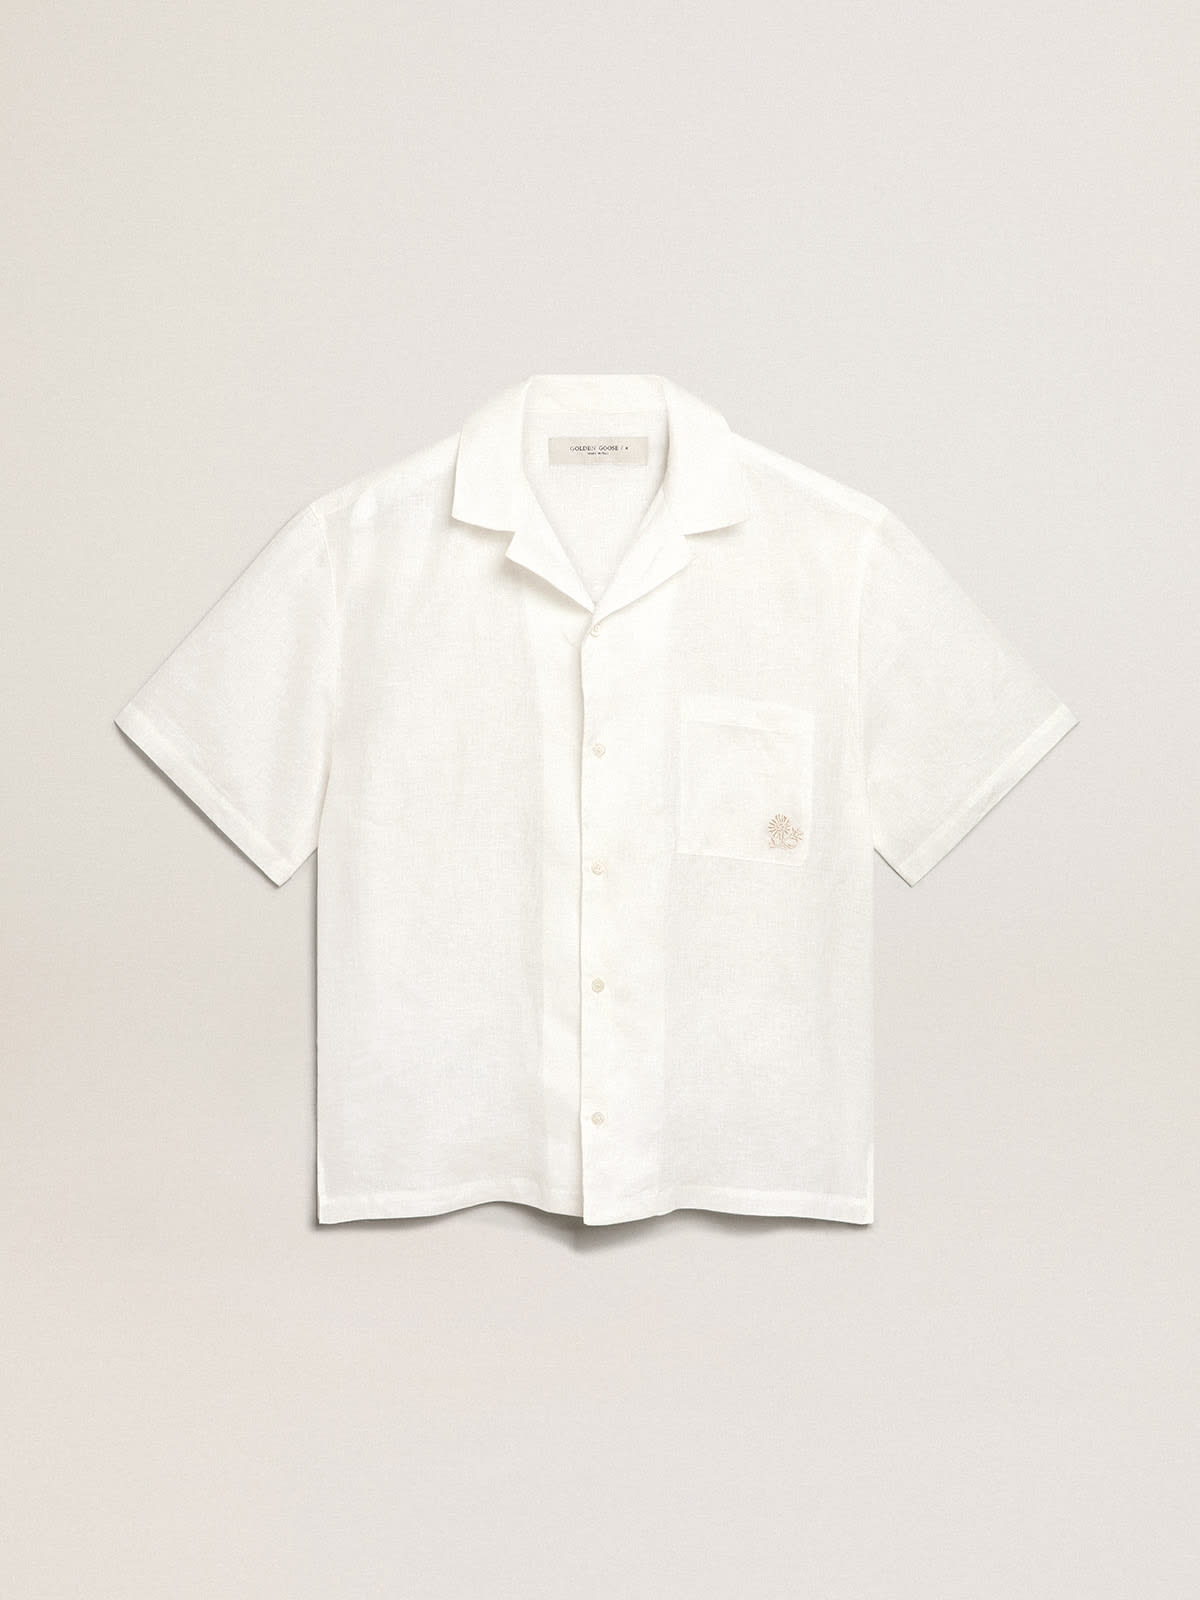 Resort Collection linen shirt in vintage white | Golden Goose